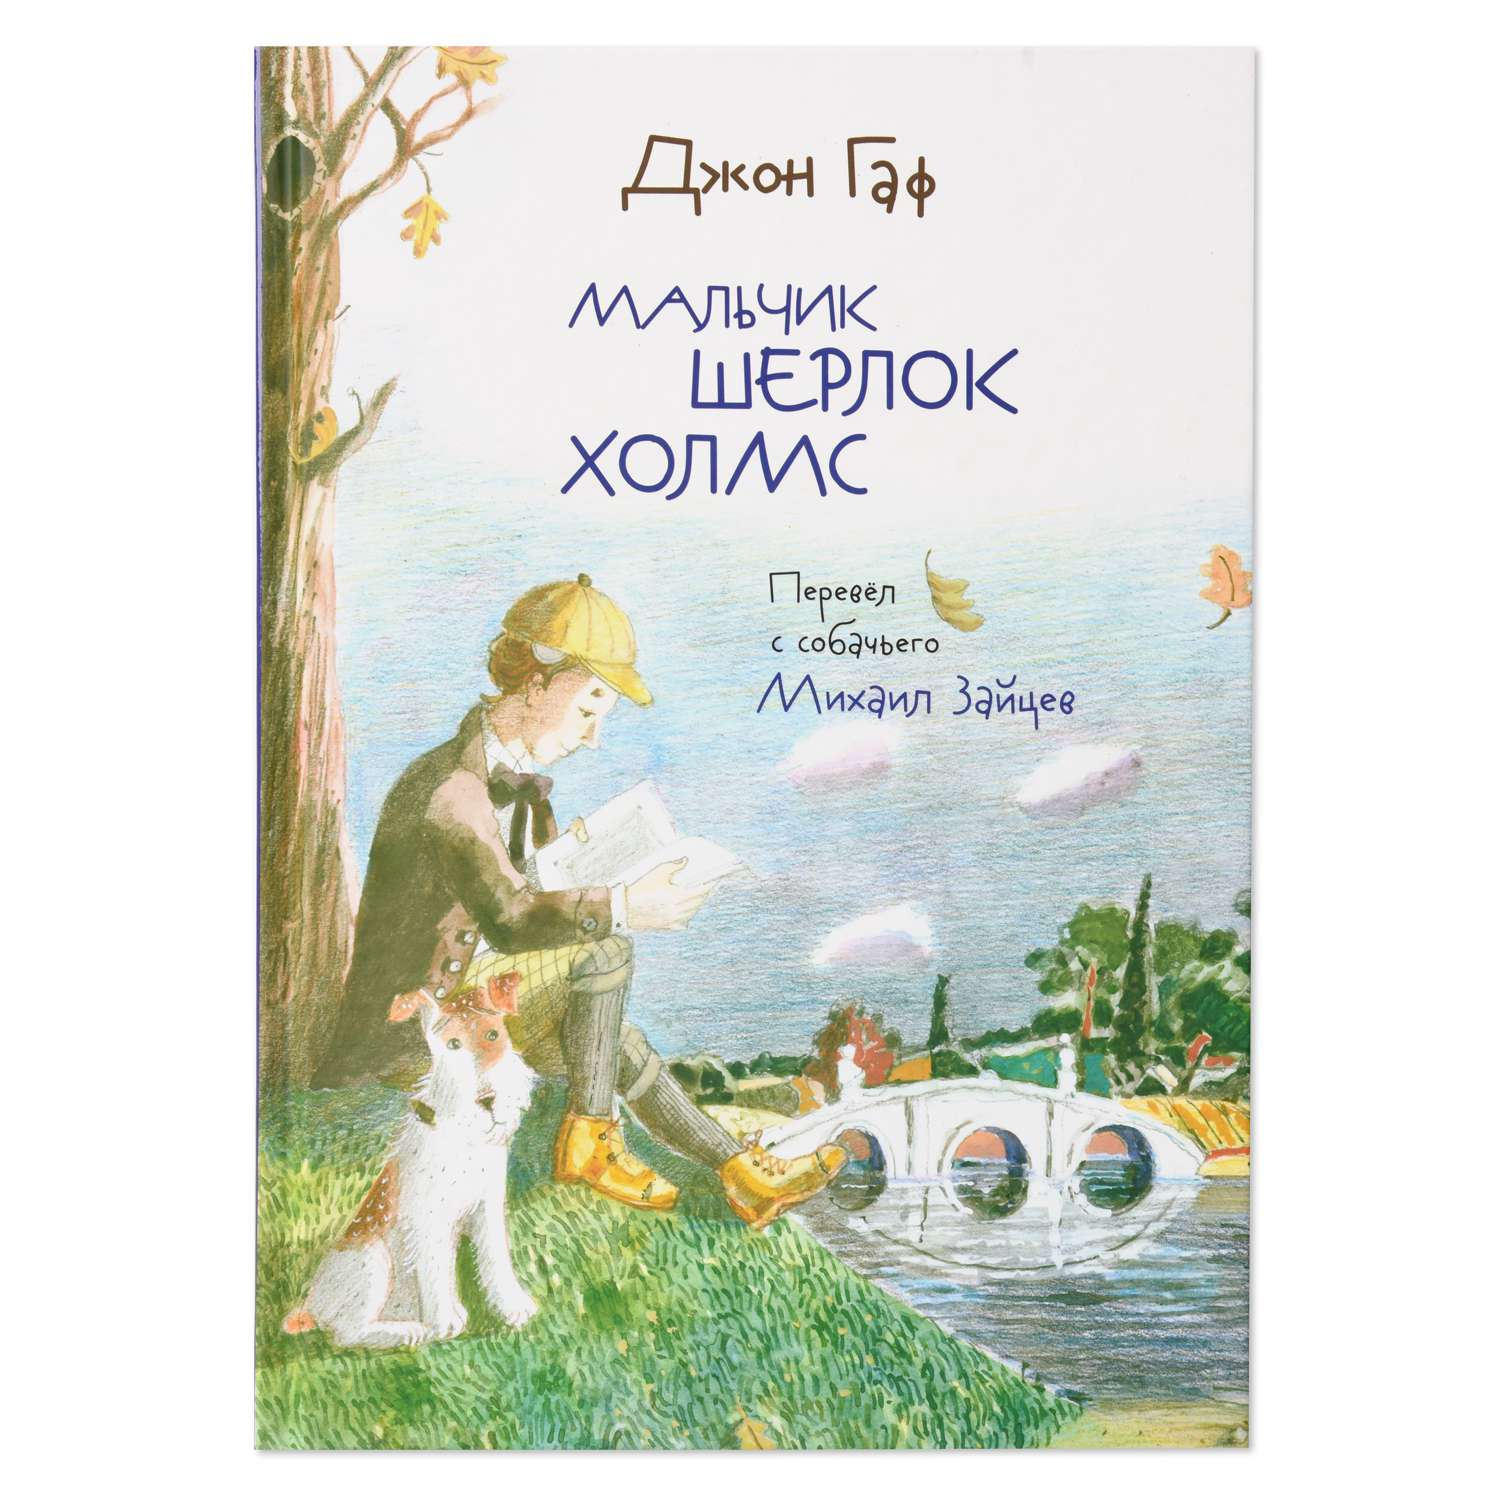 Книга Октопус Джон Гаф Мальчик Шерлок Холмс - фото 1